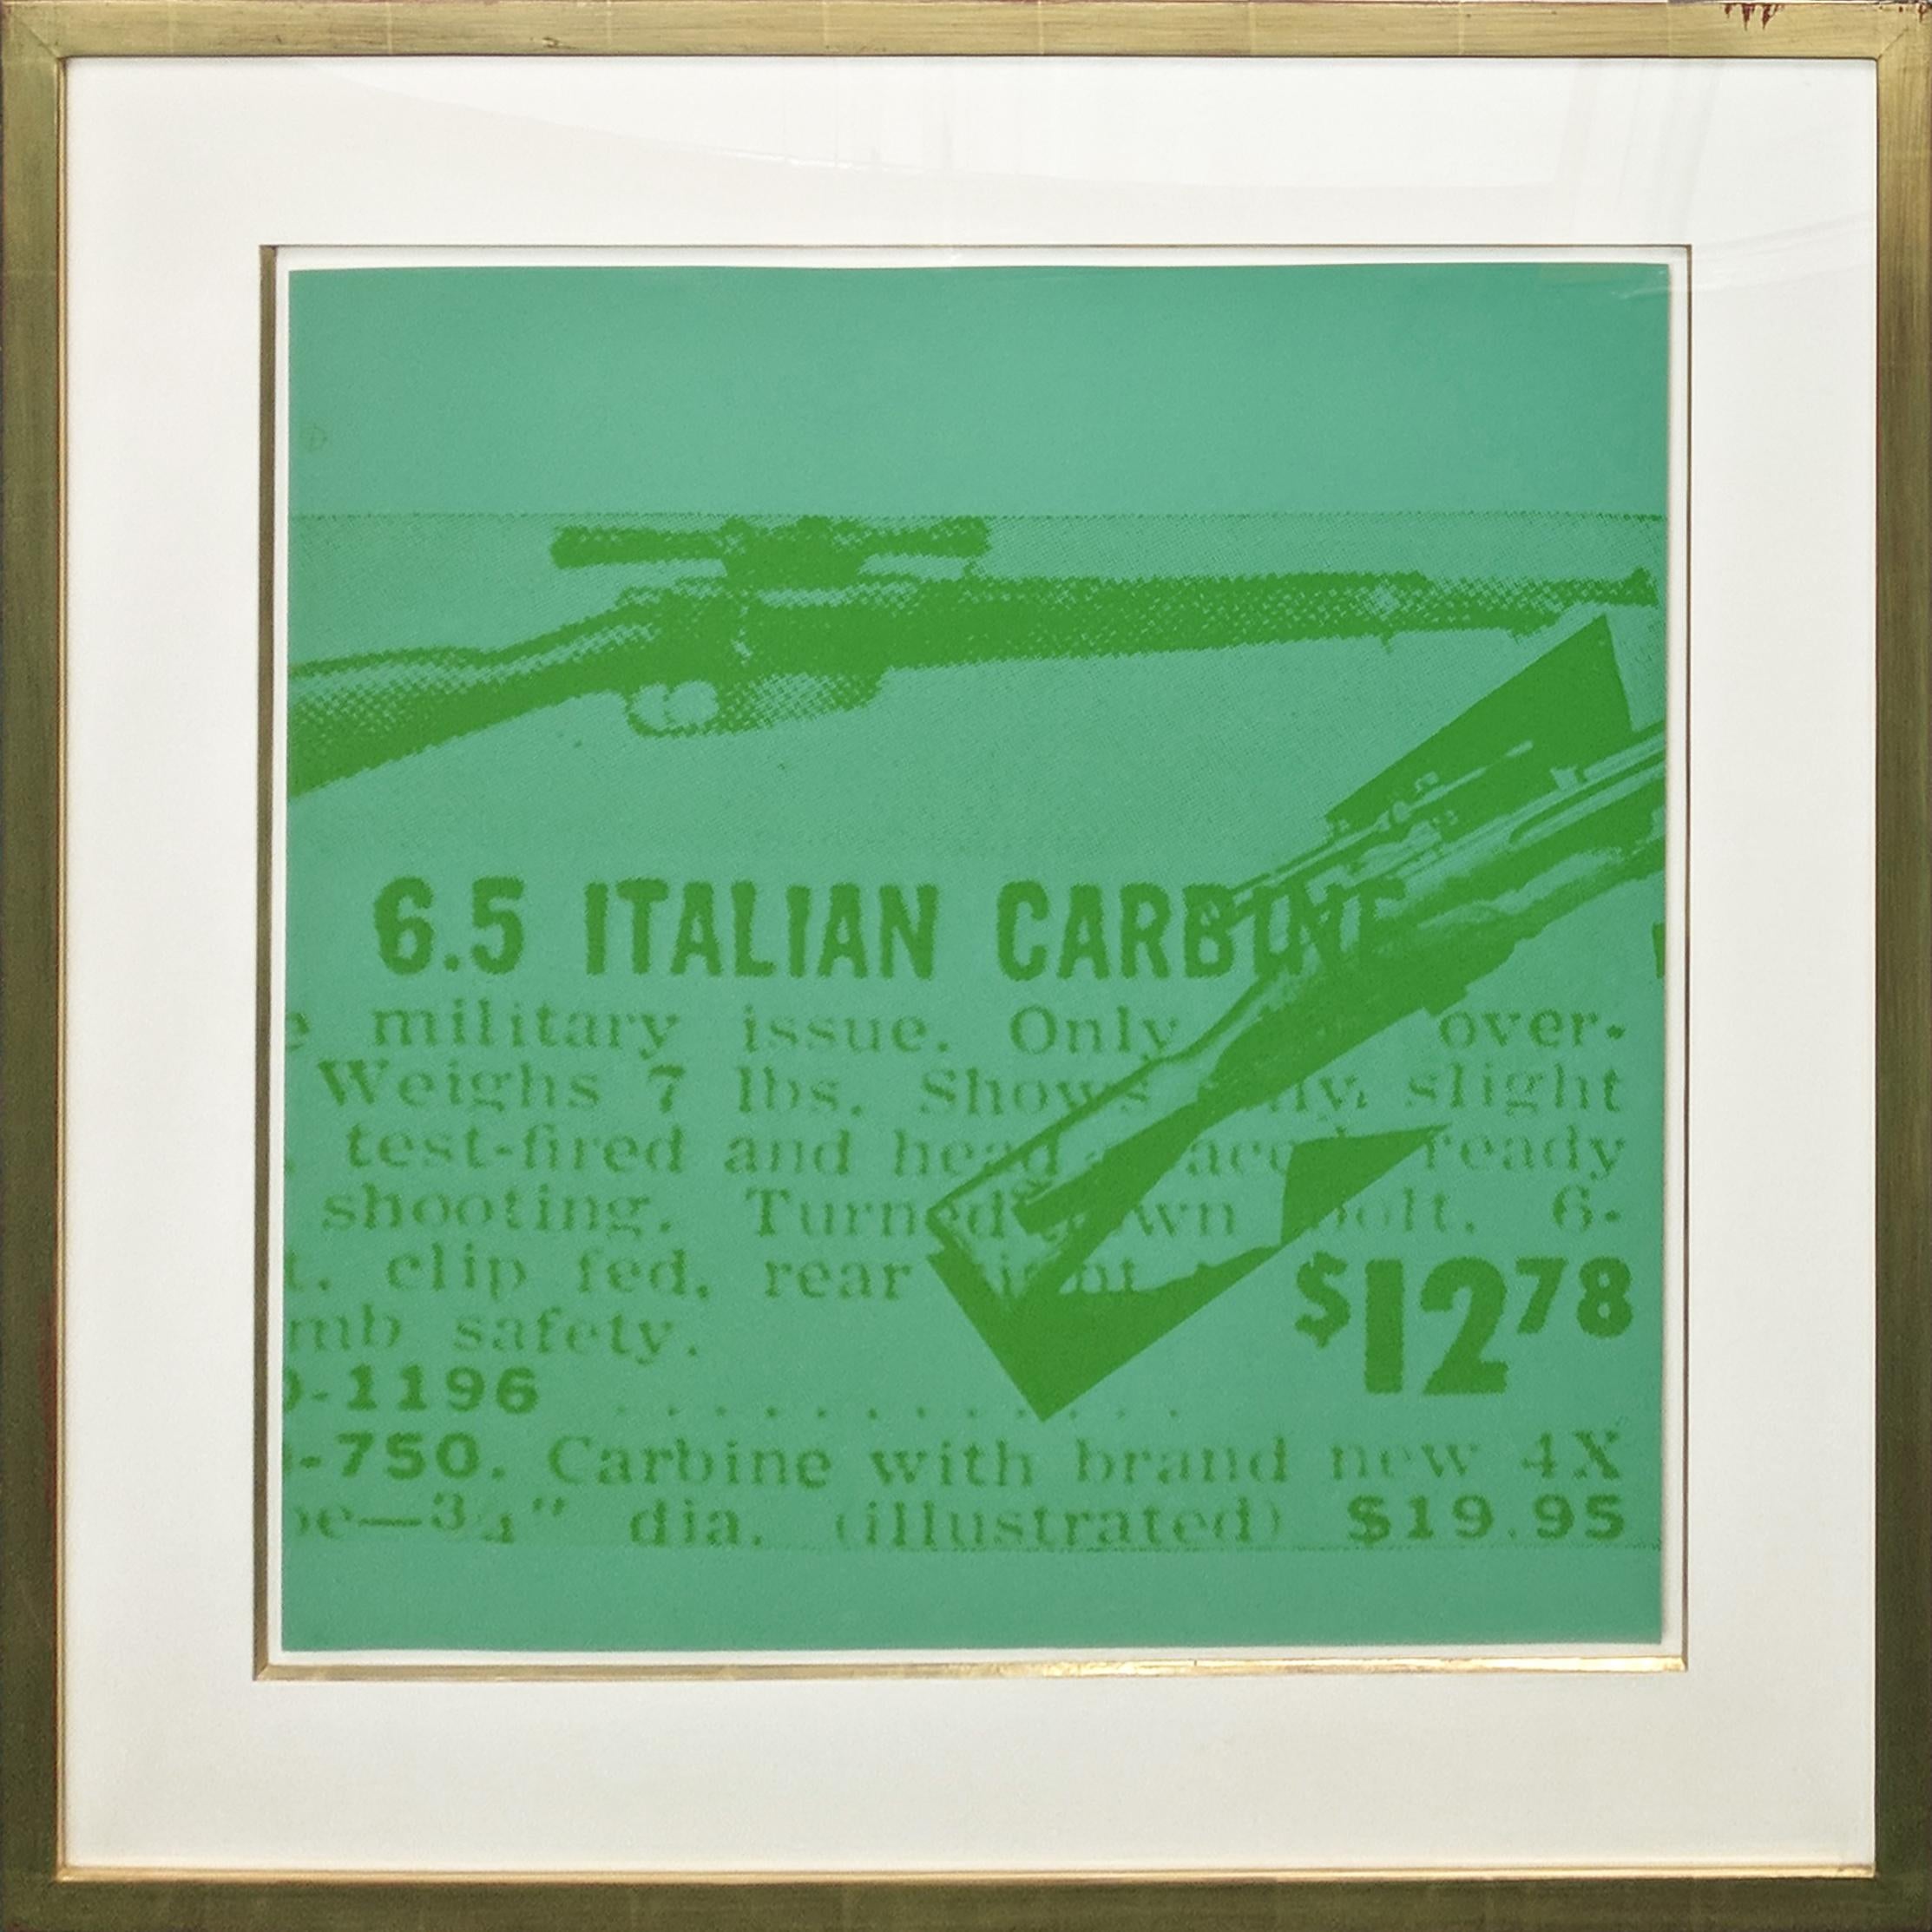 FLASH - NOVEMBER 22, 1963 FS II. 37 - Print by Andy Warhol